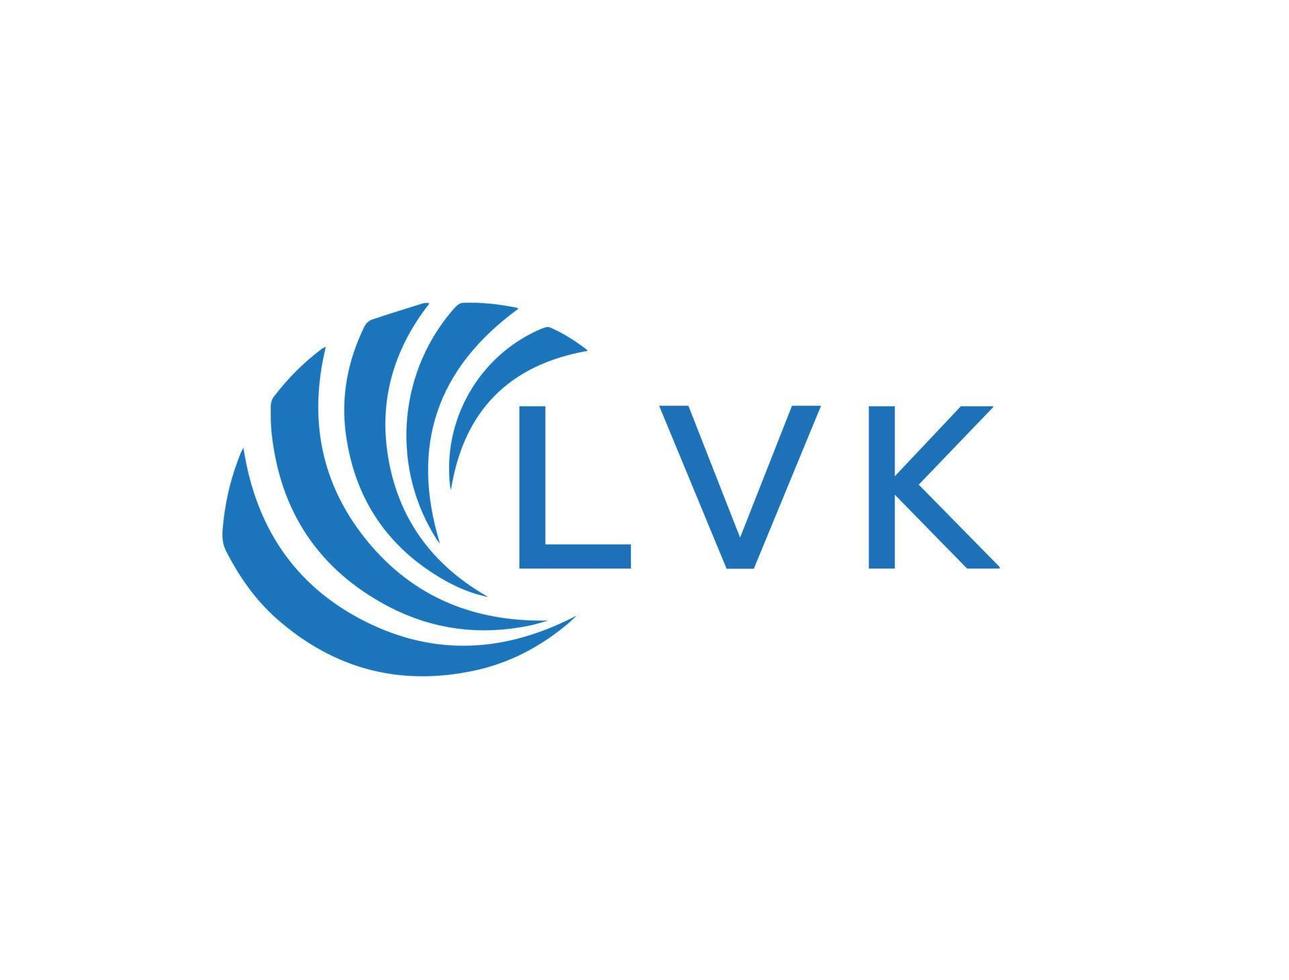 lvk resumen negocio crecimiento logo diseño en blanco antecedentes. lvk creativo iniciales letra logo concepto. vector